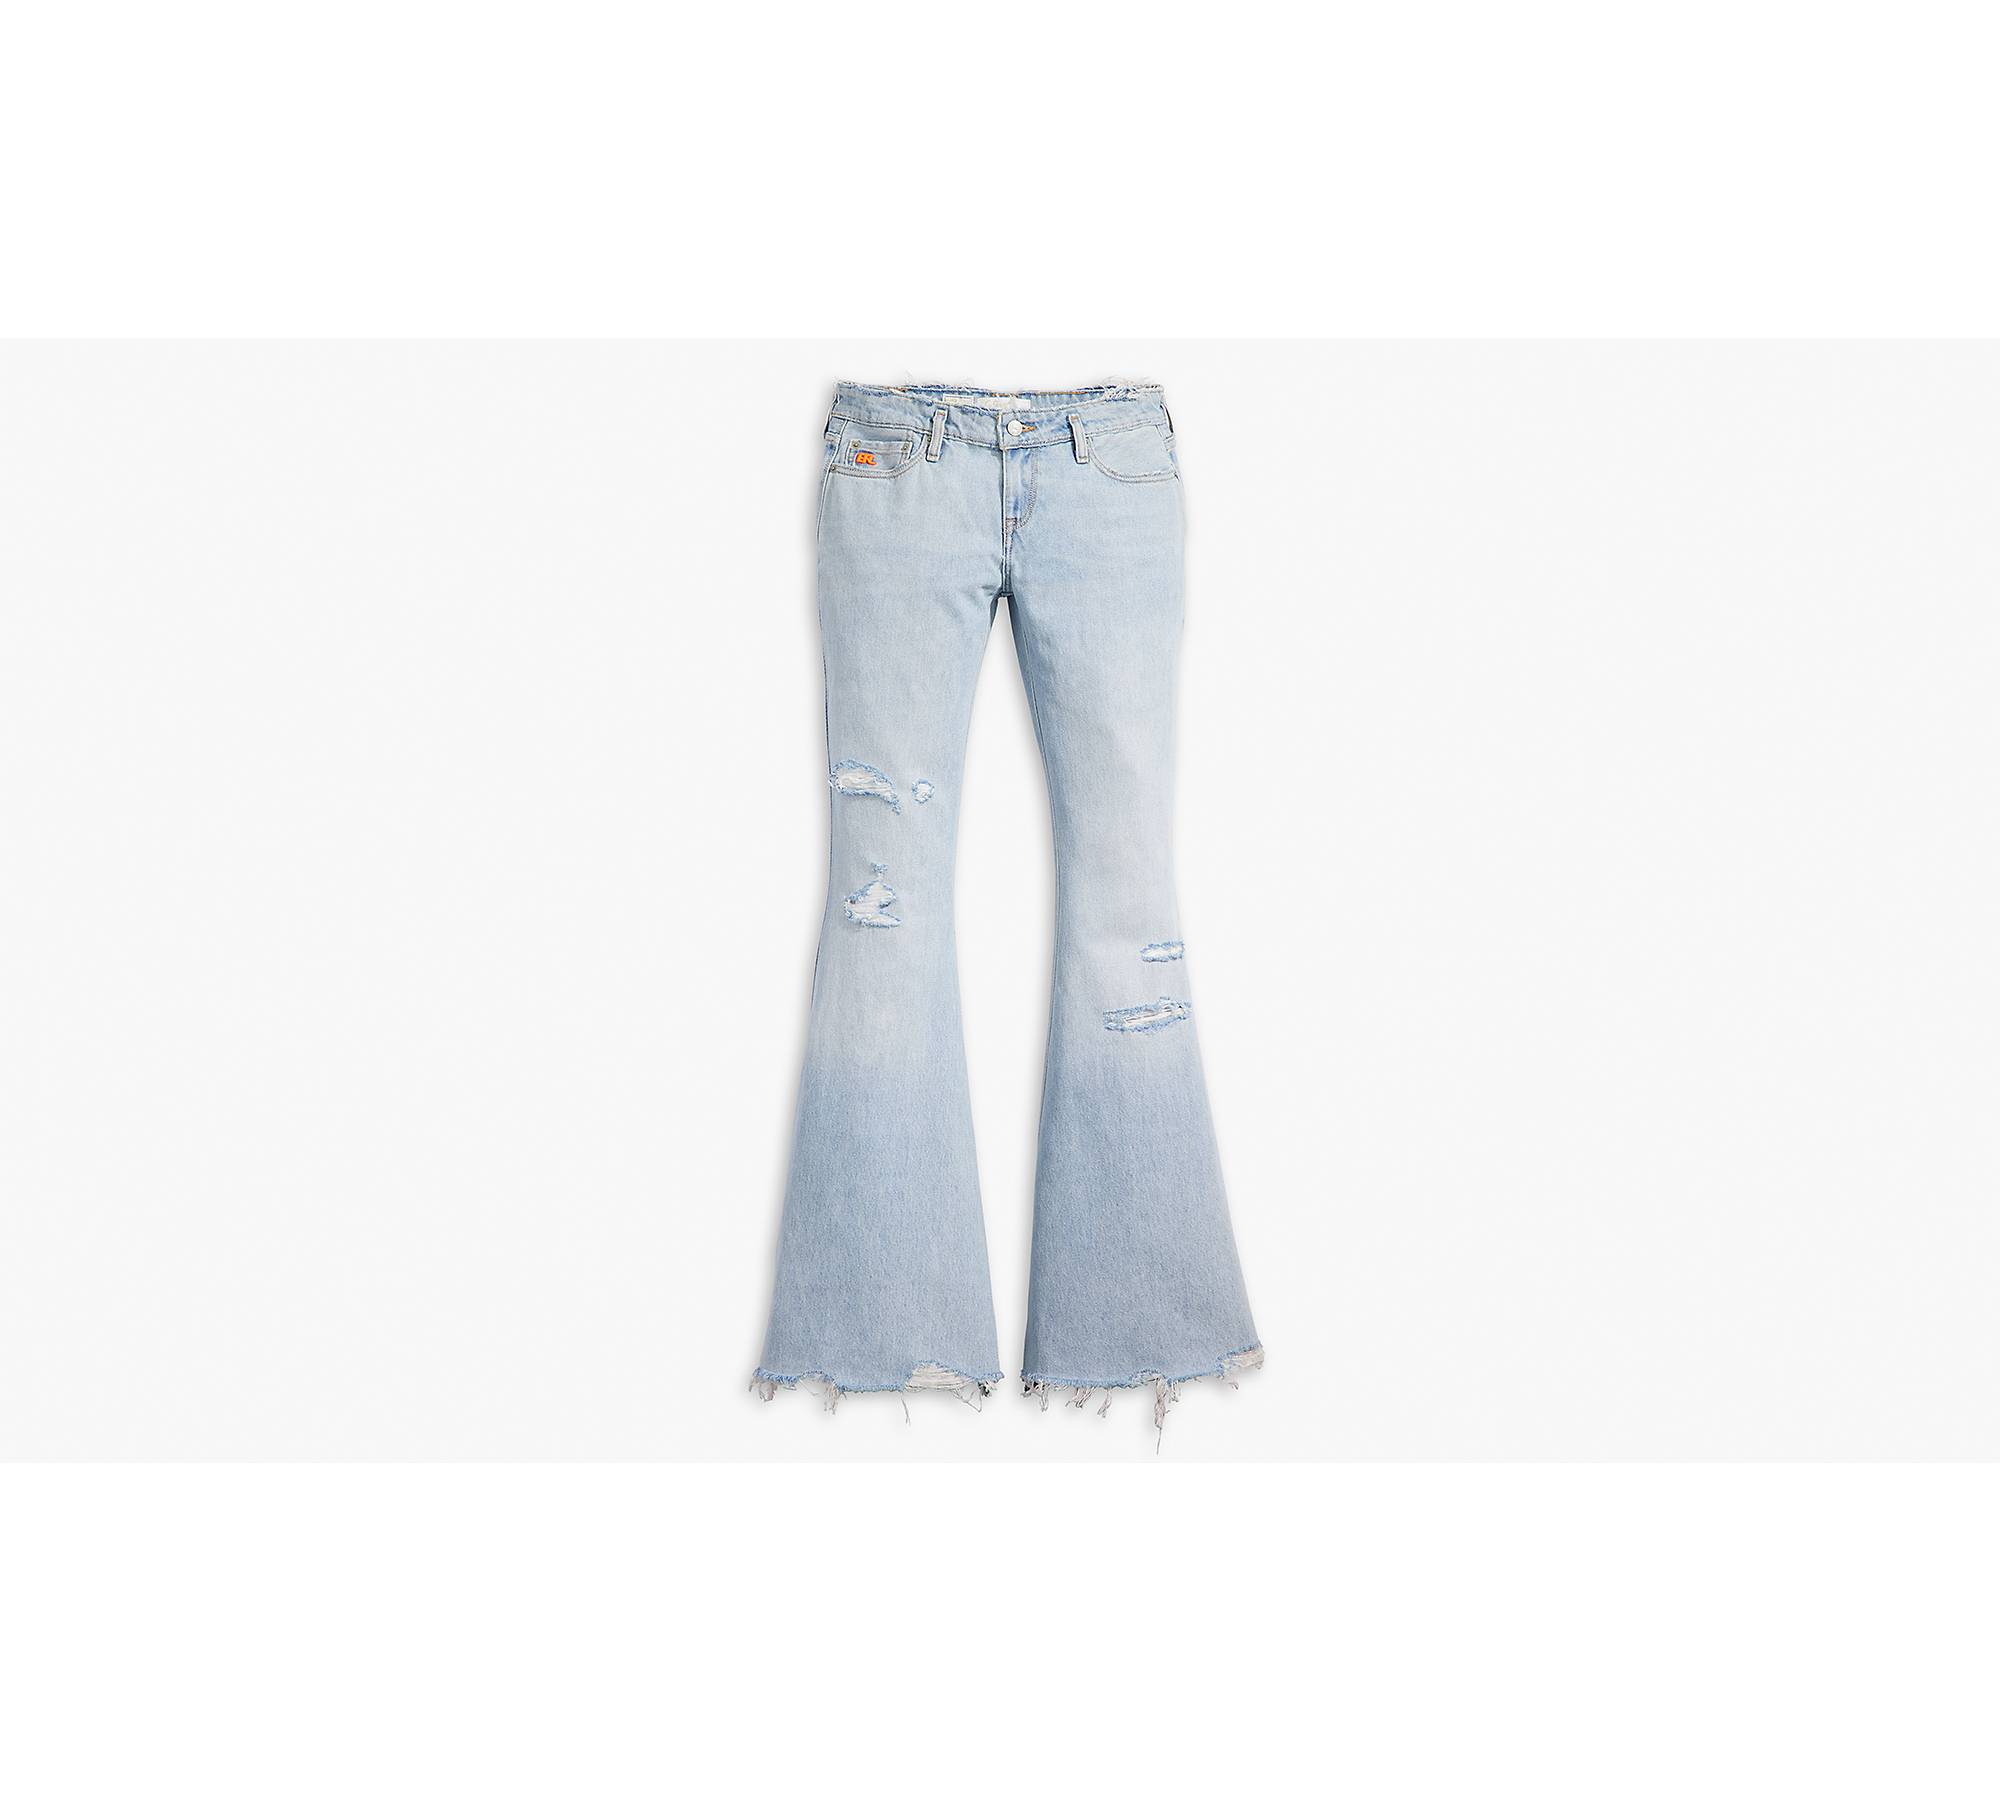 lemmer inkompetence Metal linje jeans levis clasicos mujer Svig